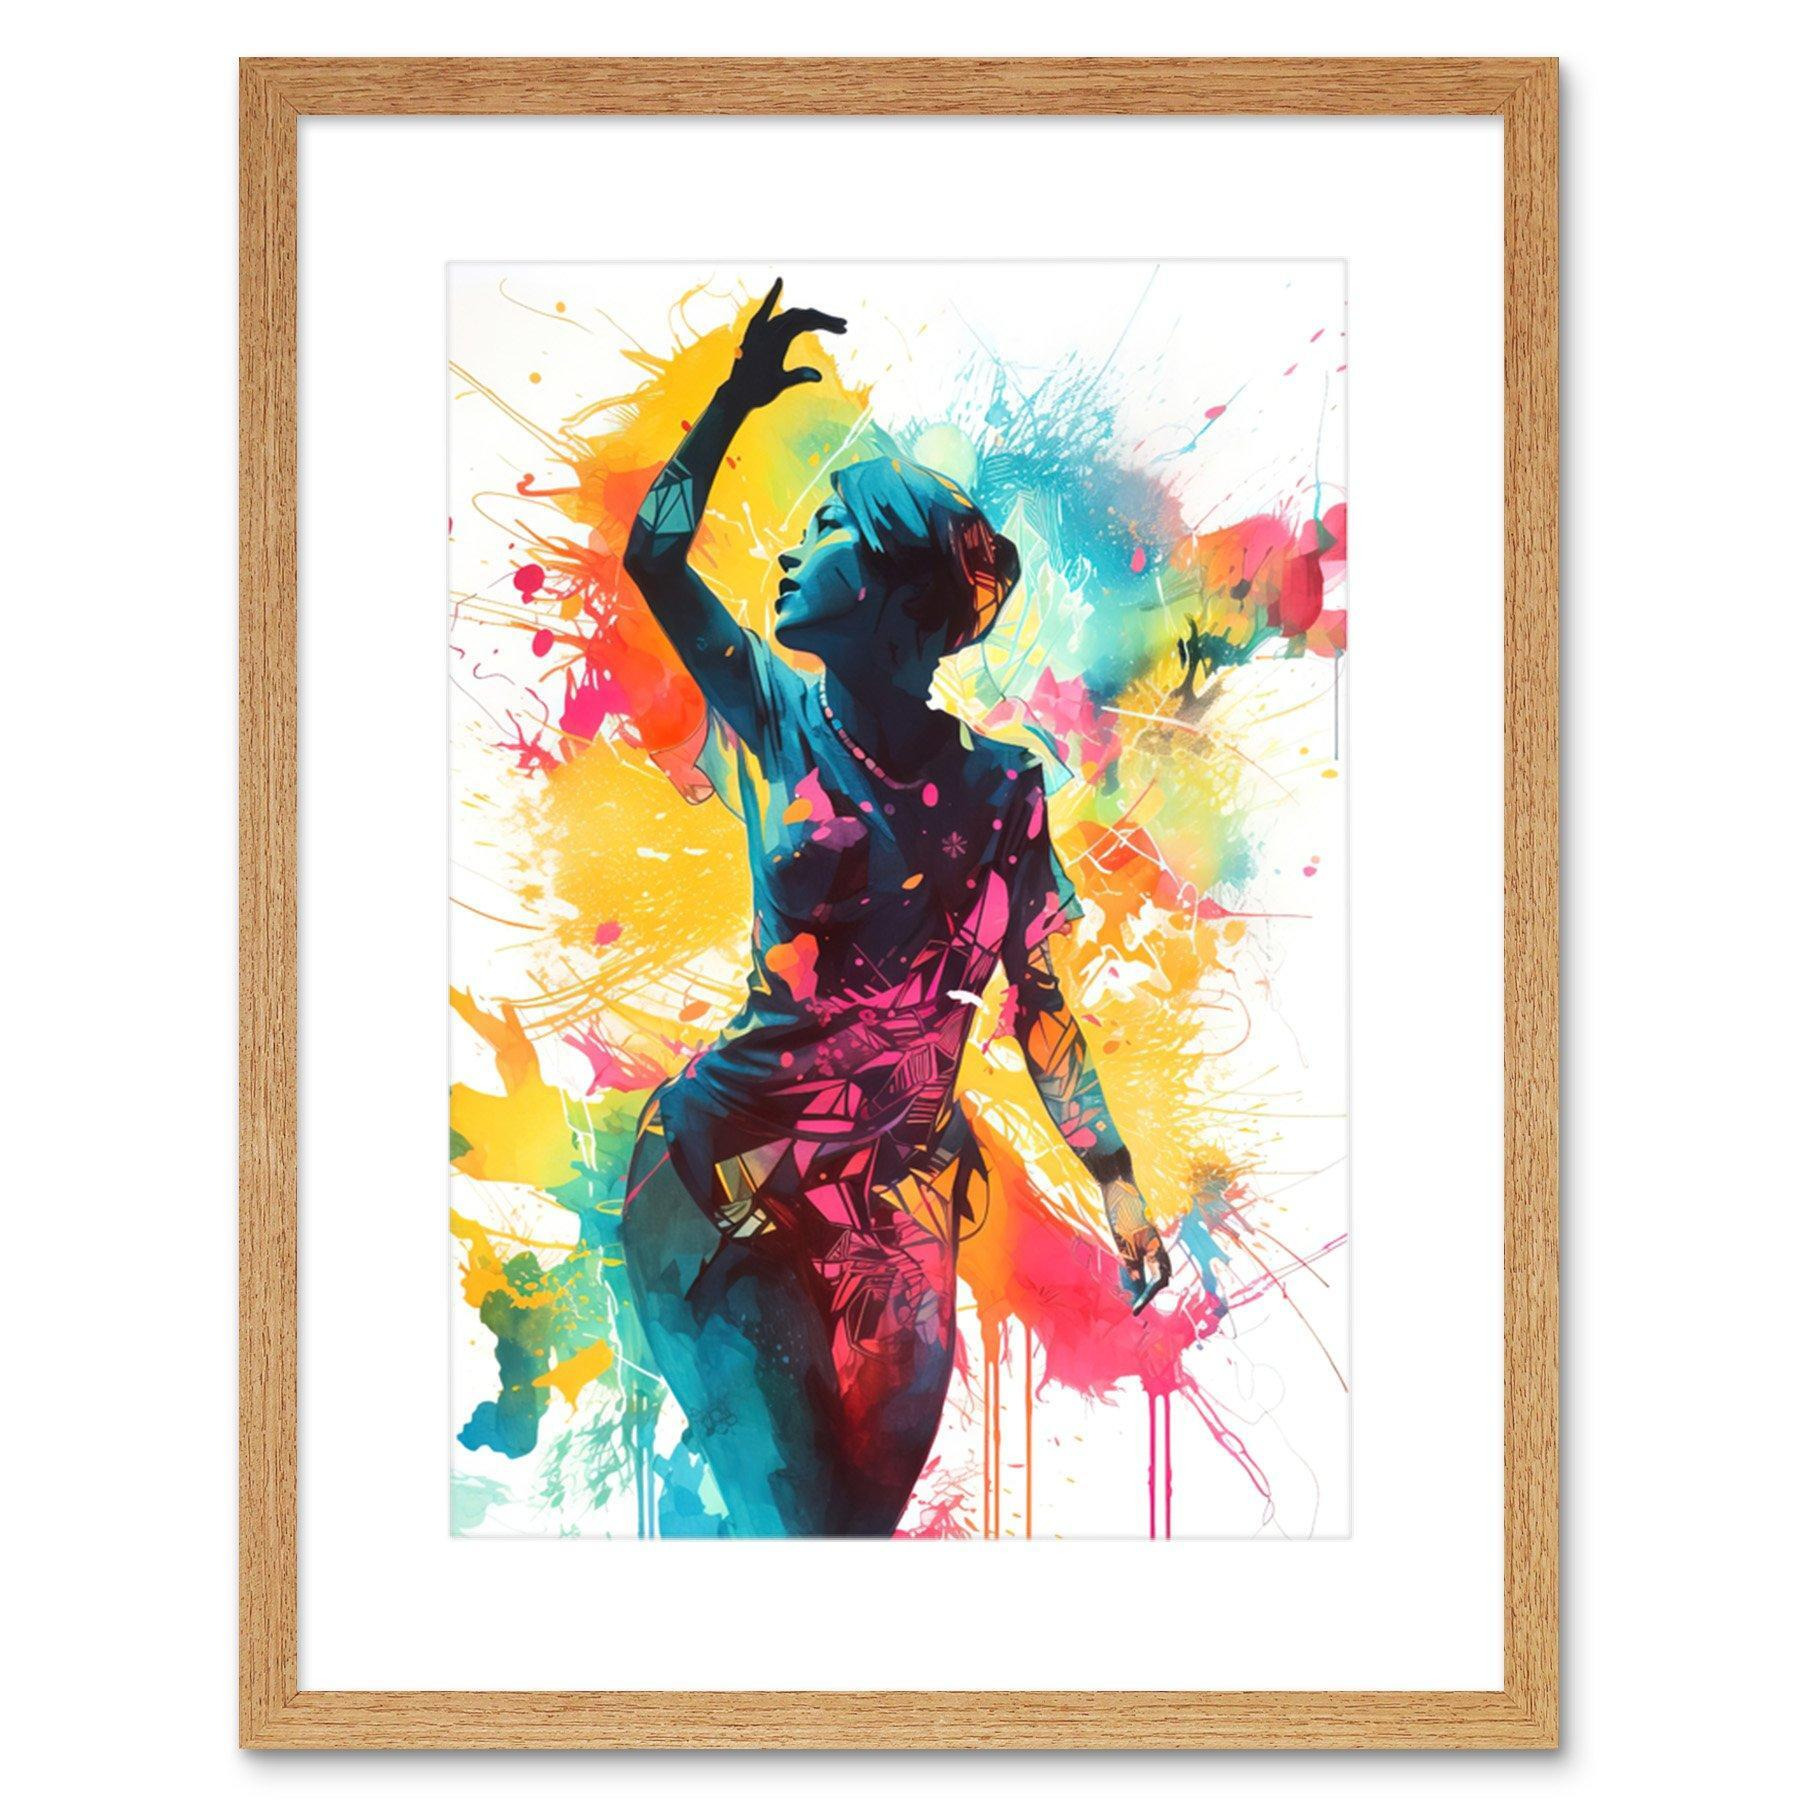 Holi Festival of Colour Woman Dancing to Music Modern Paint Splatter Artwork Framed Wall Art Print 9X7 Inch - image 1